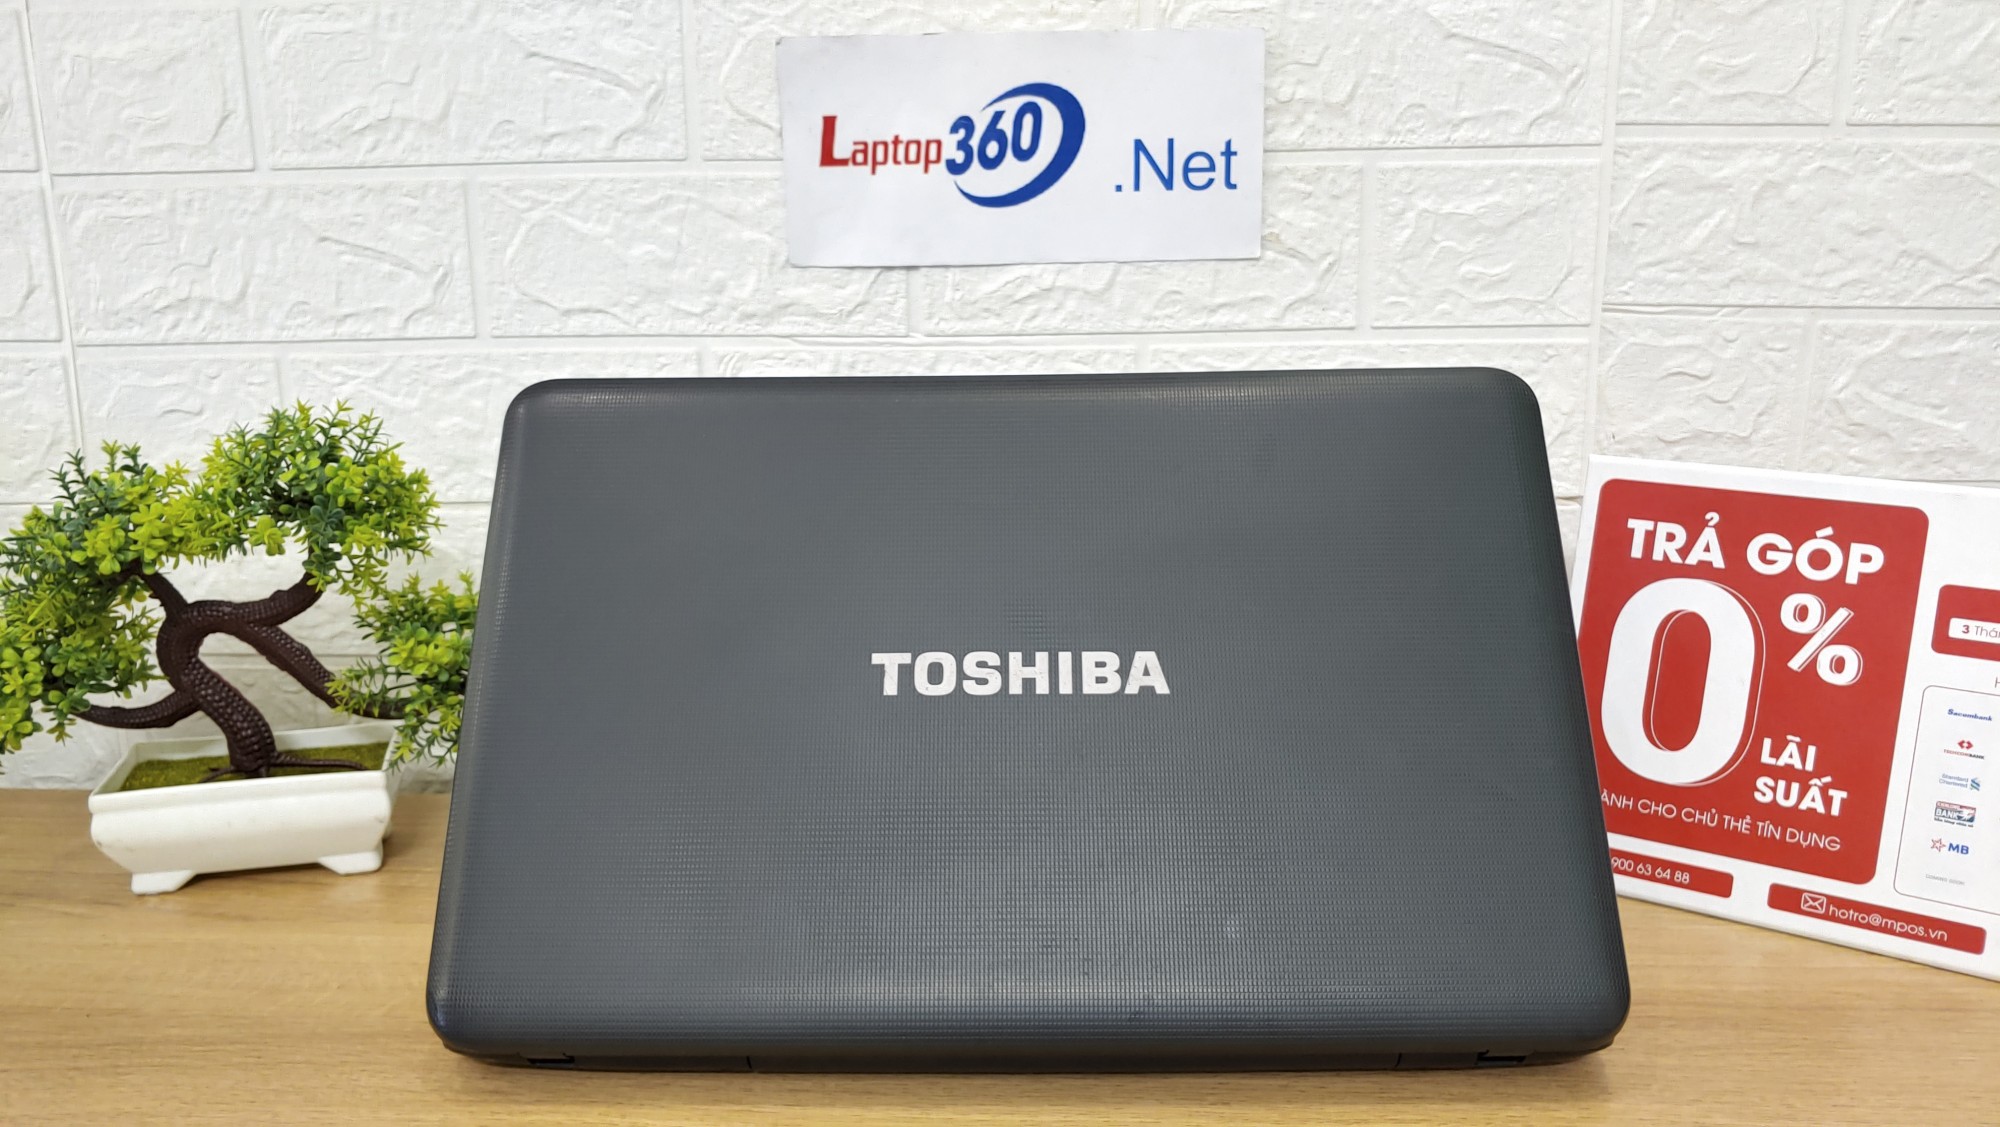 Toshiba C850